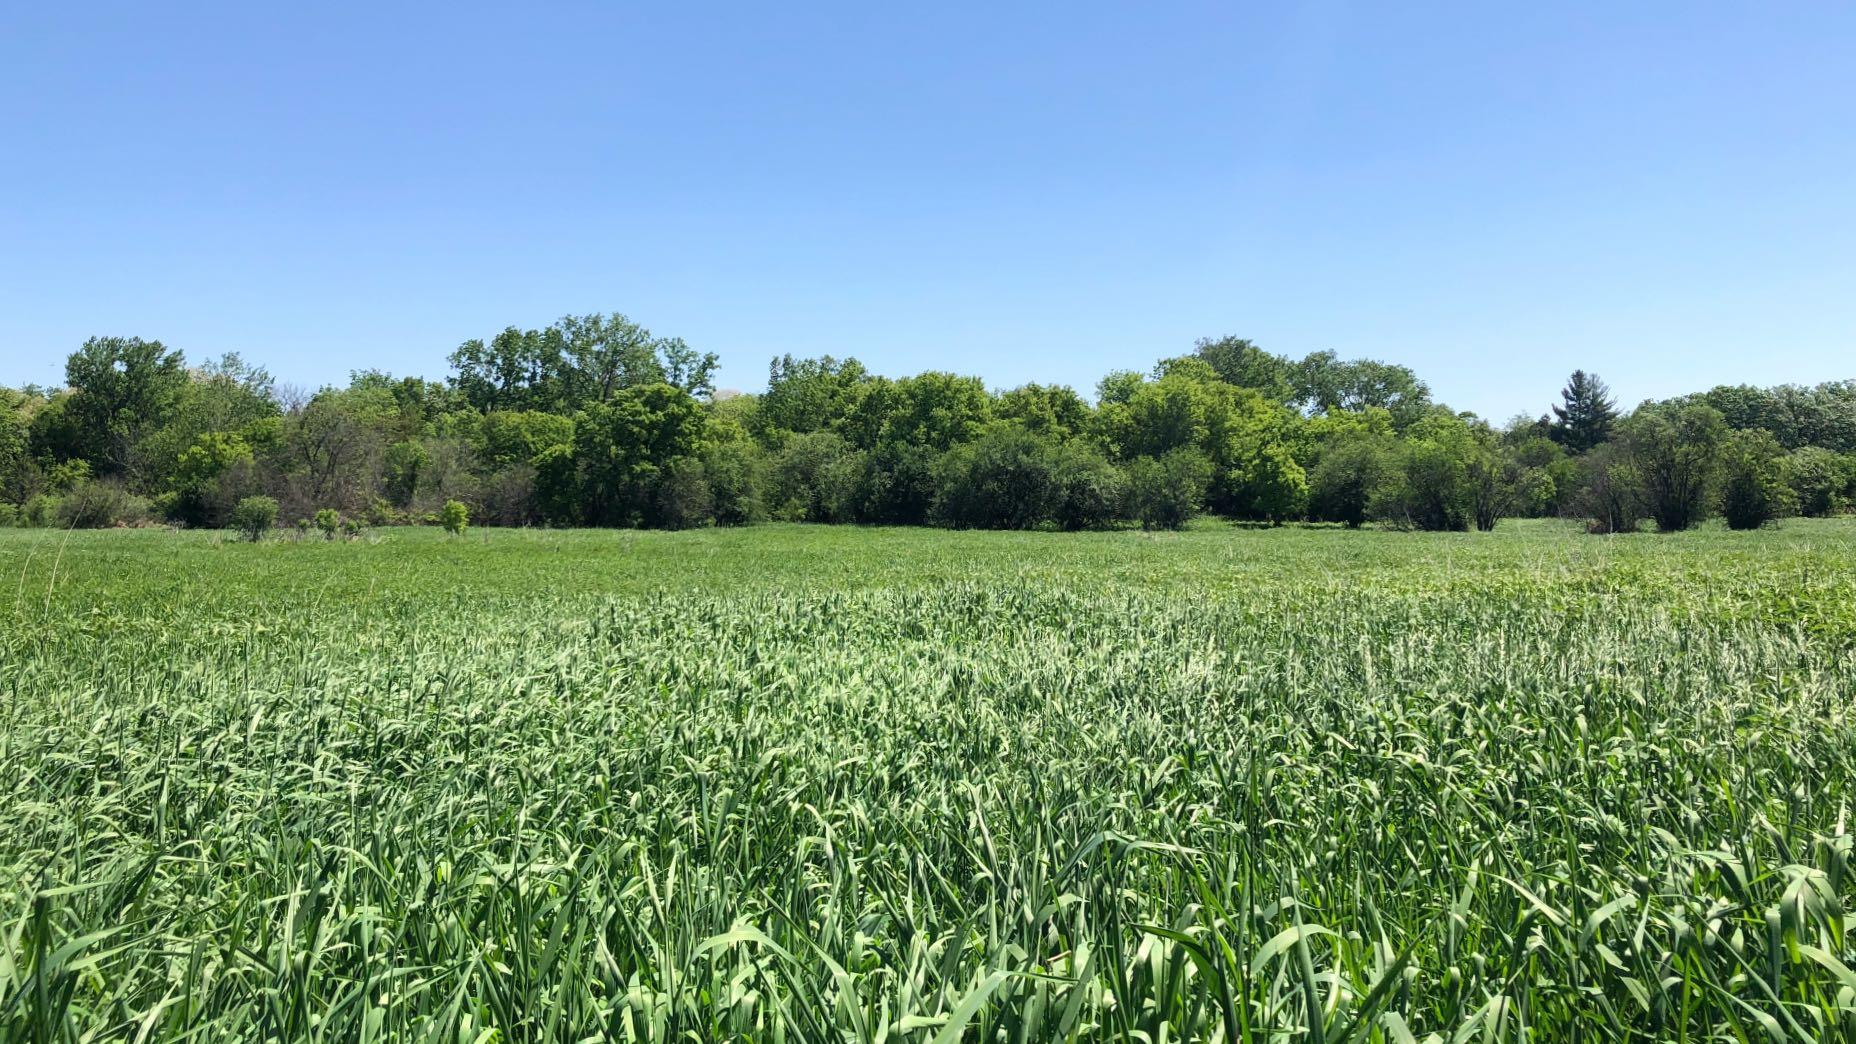 Thompson Road Farm: sea of reed grass. (Patty Wetli / WTTW News)